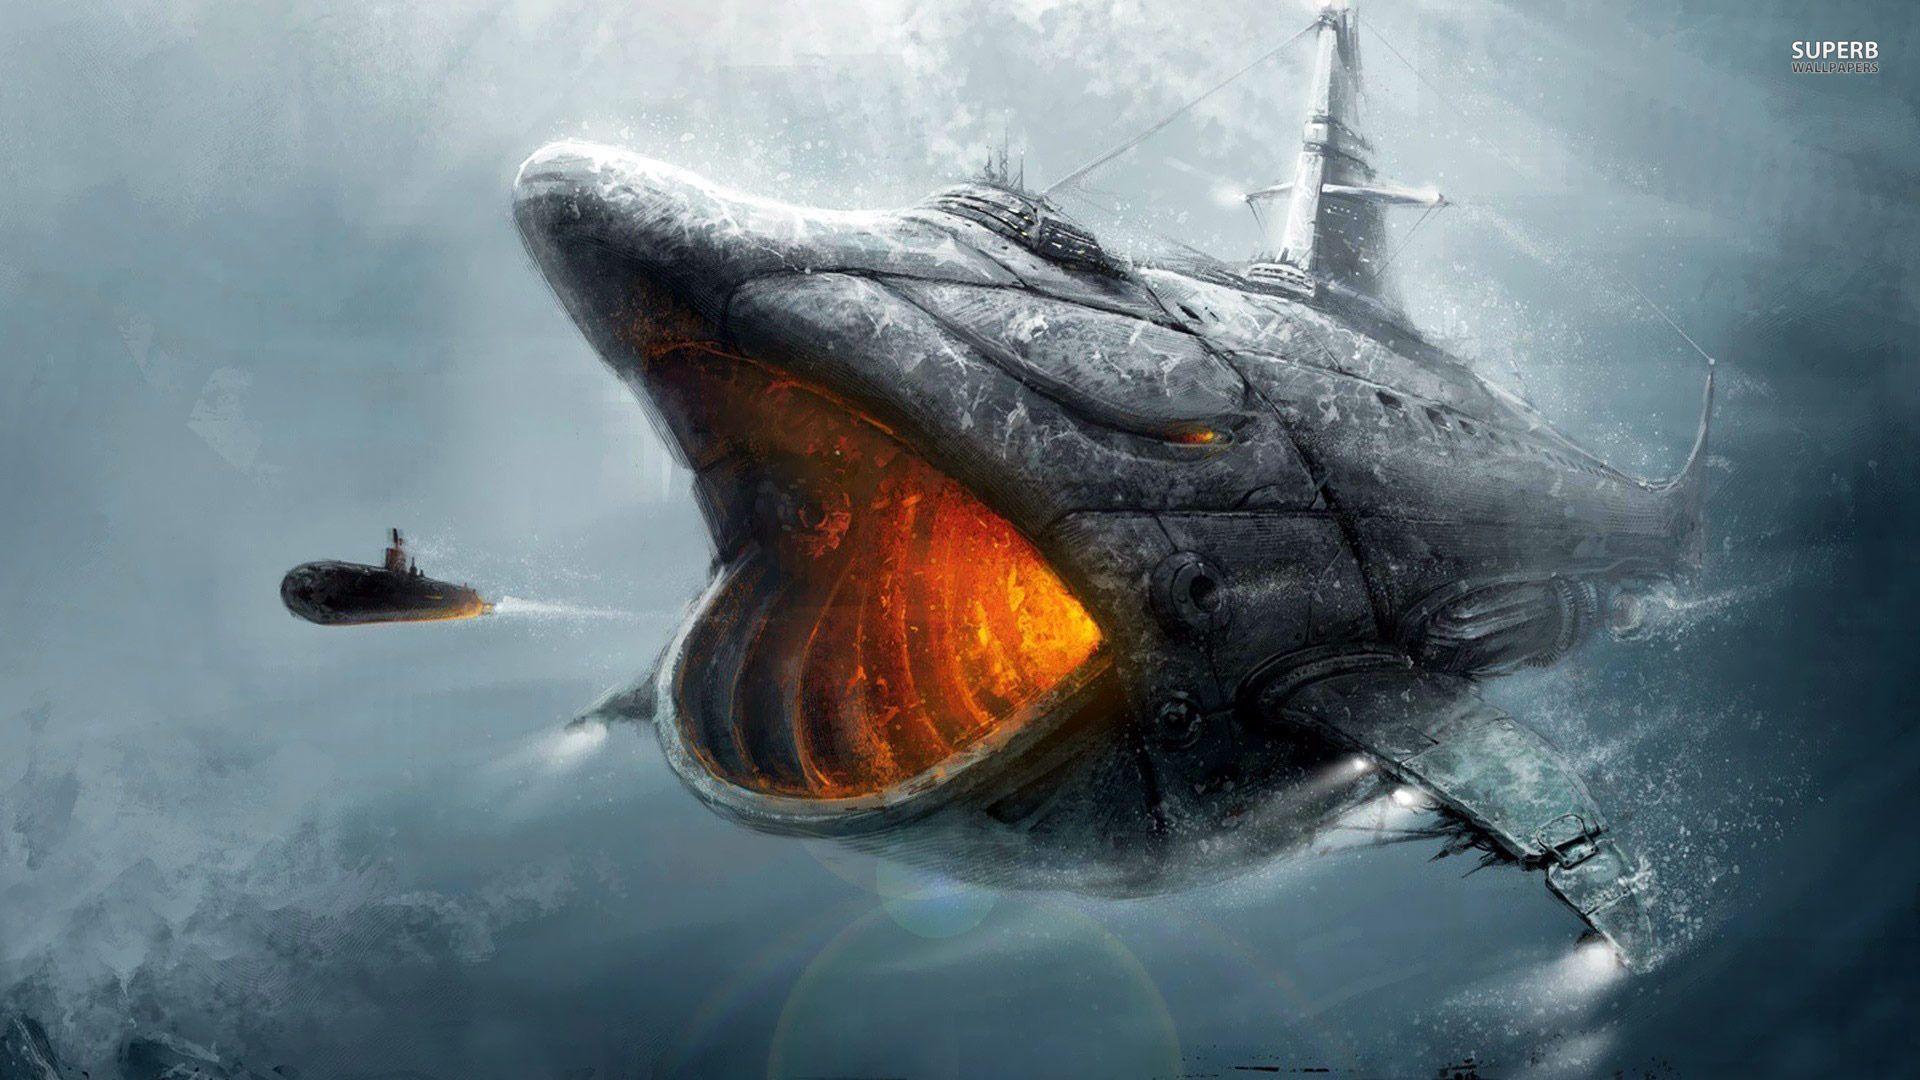 lol this is for fun .shark week submarine fantasy desktop